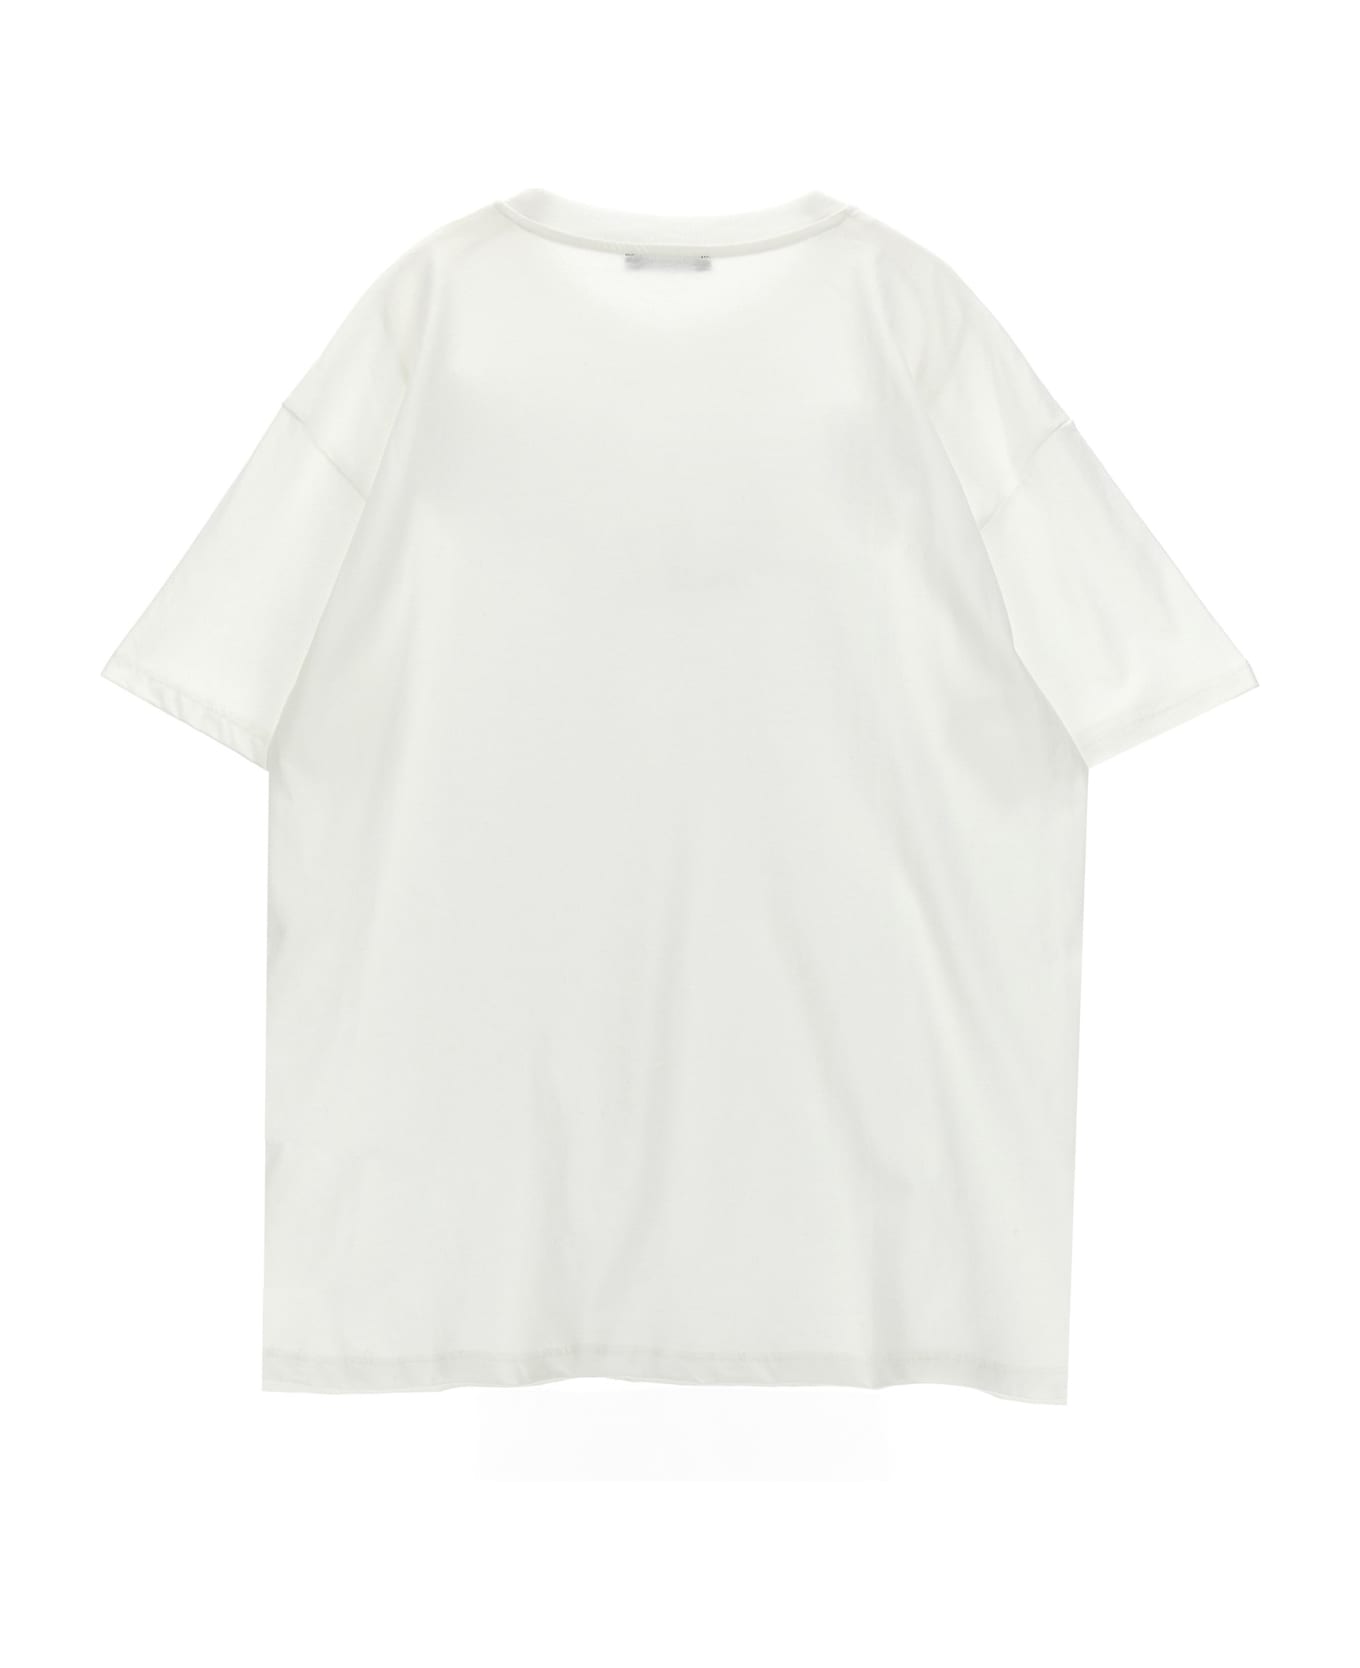 Balmain Logo T-shirt - White/black